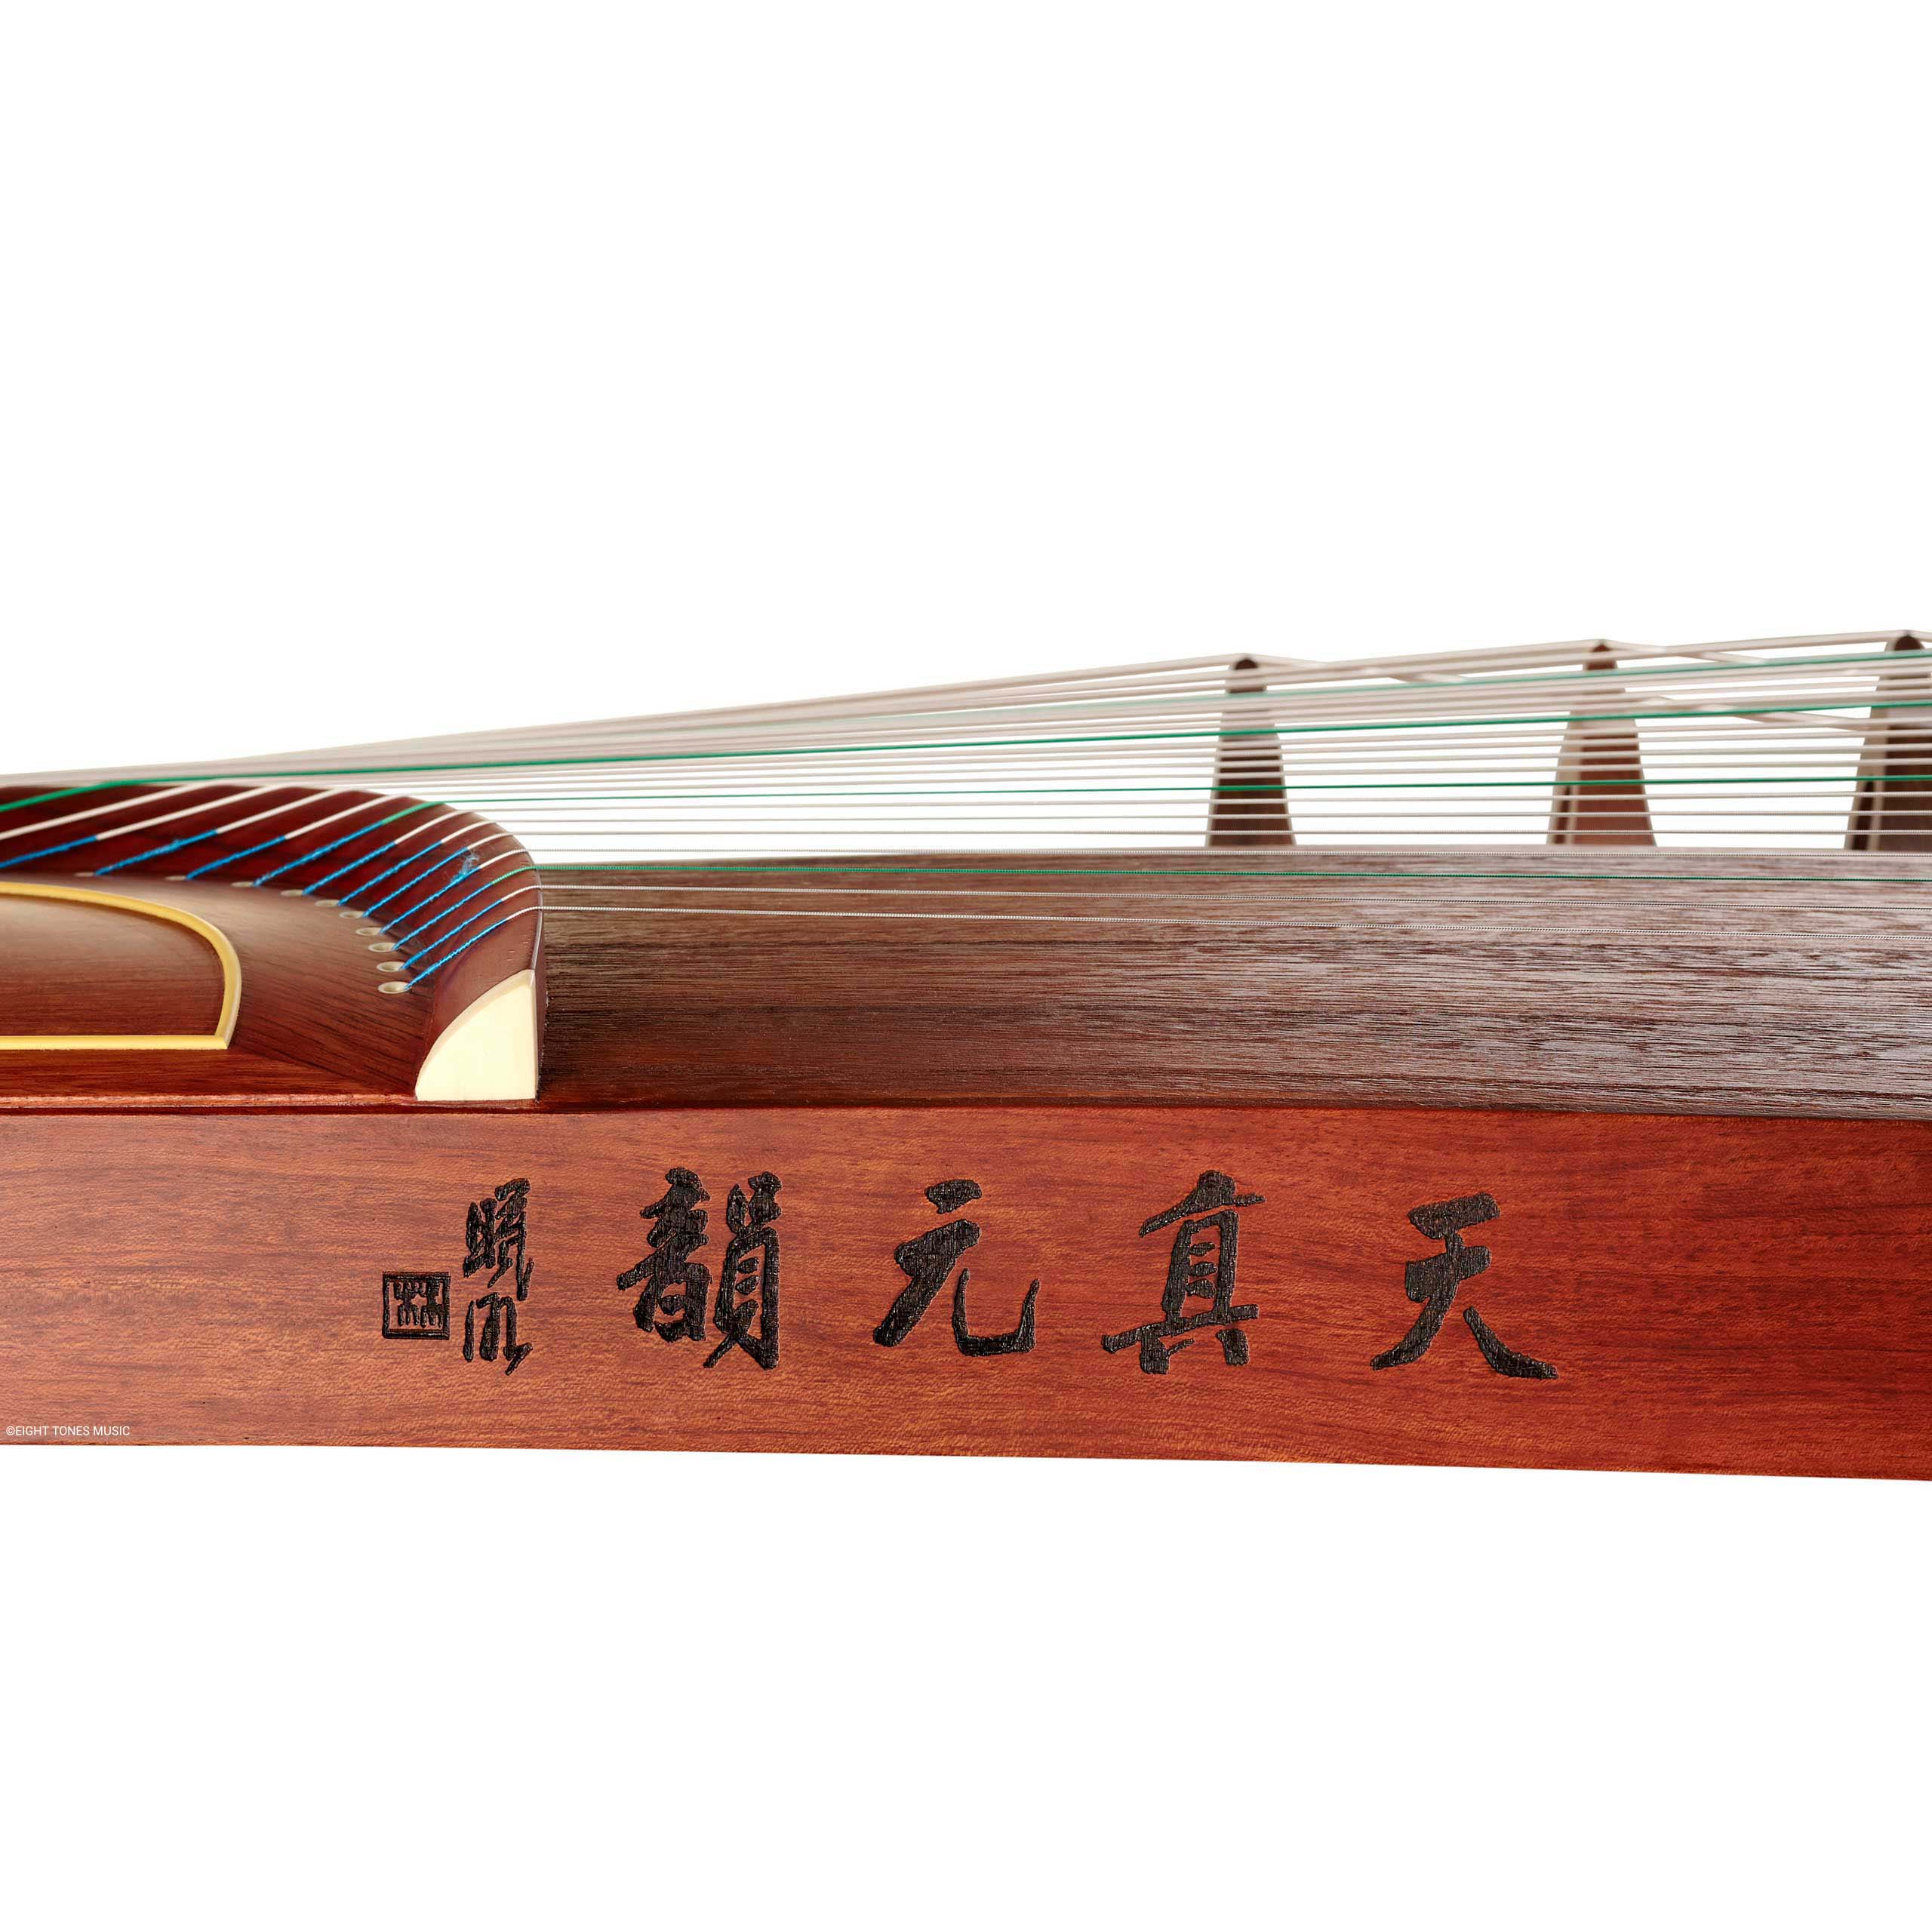 Dunhuang Yichang ‘Perfection in Innocence’ Rosewood Guzheng Sideboard